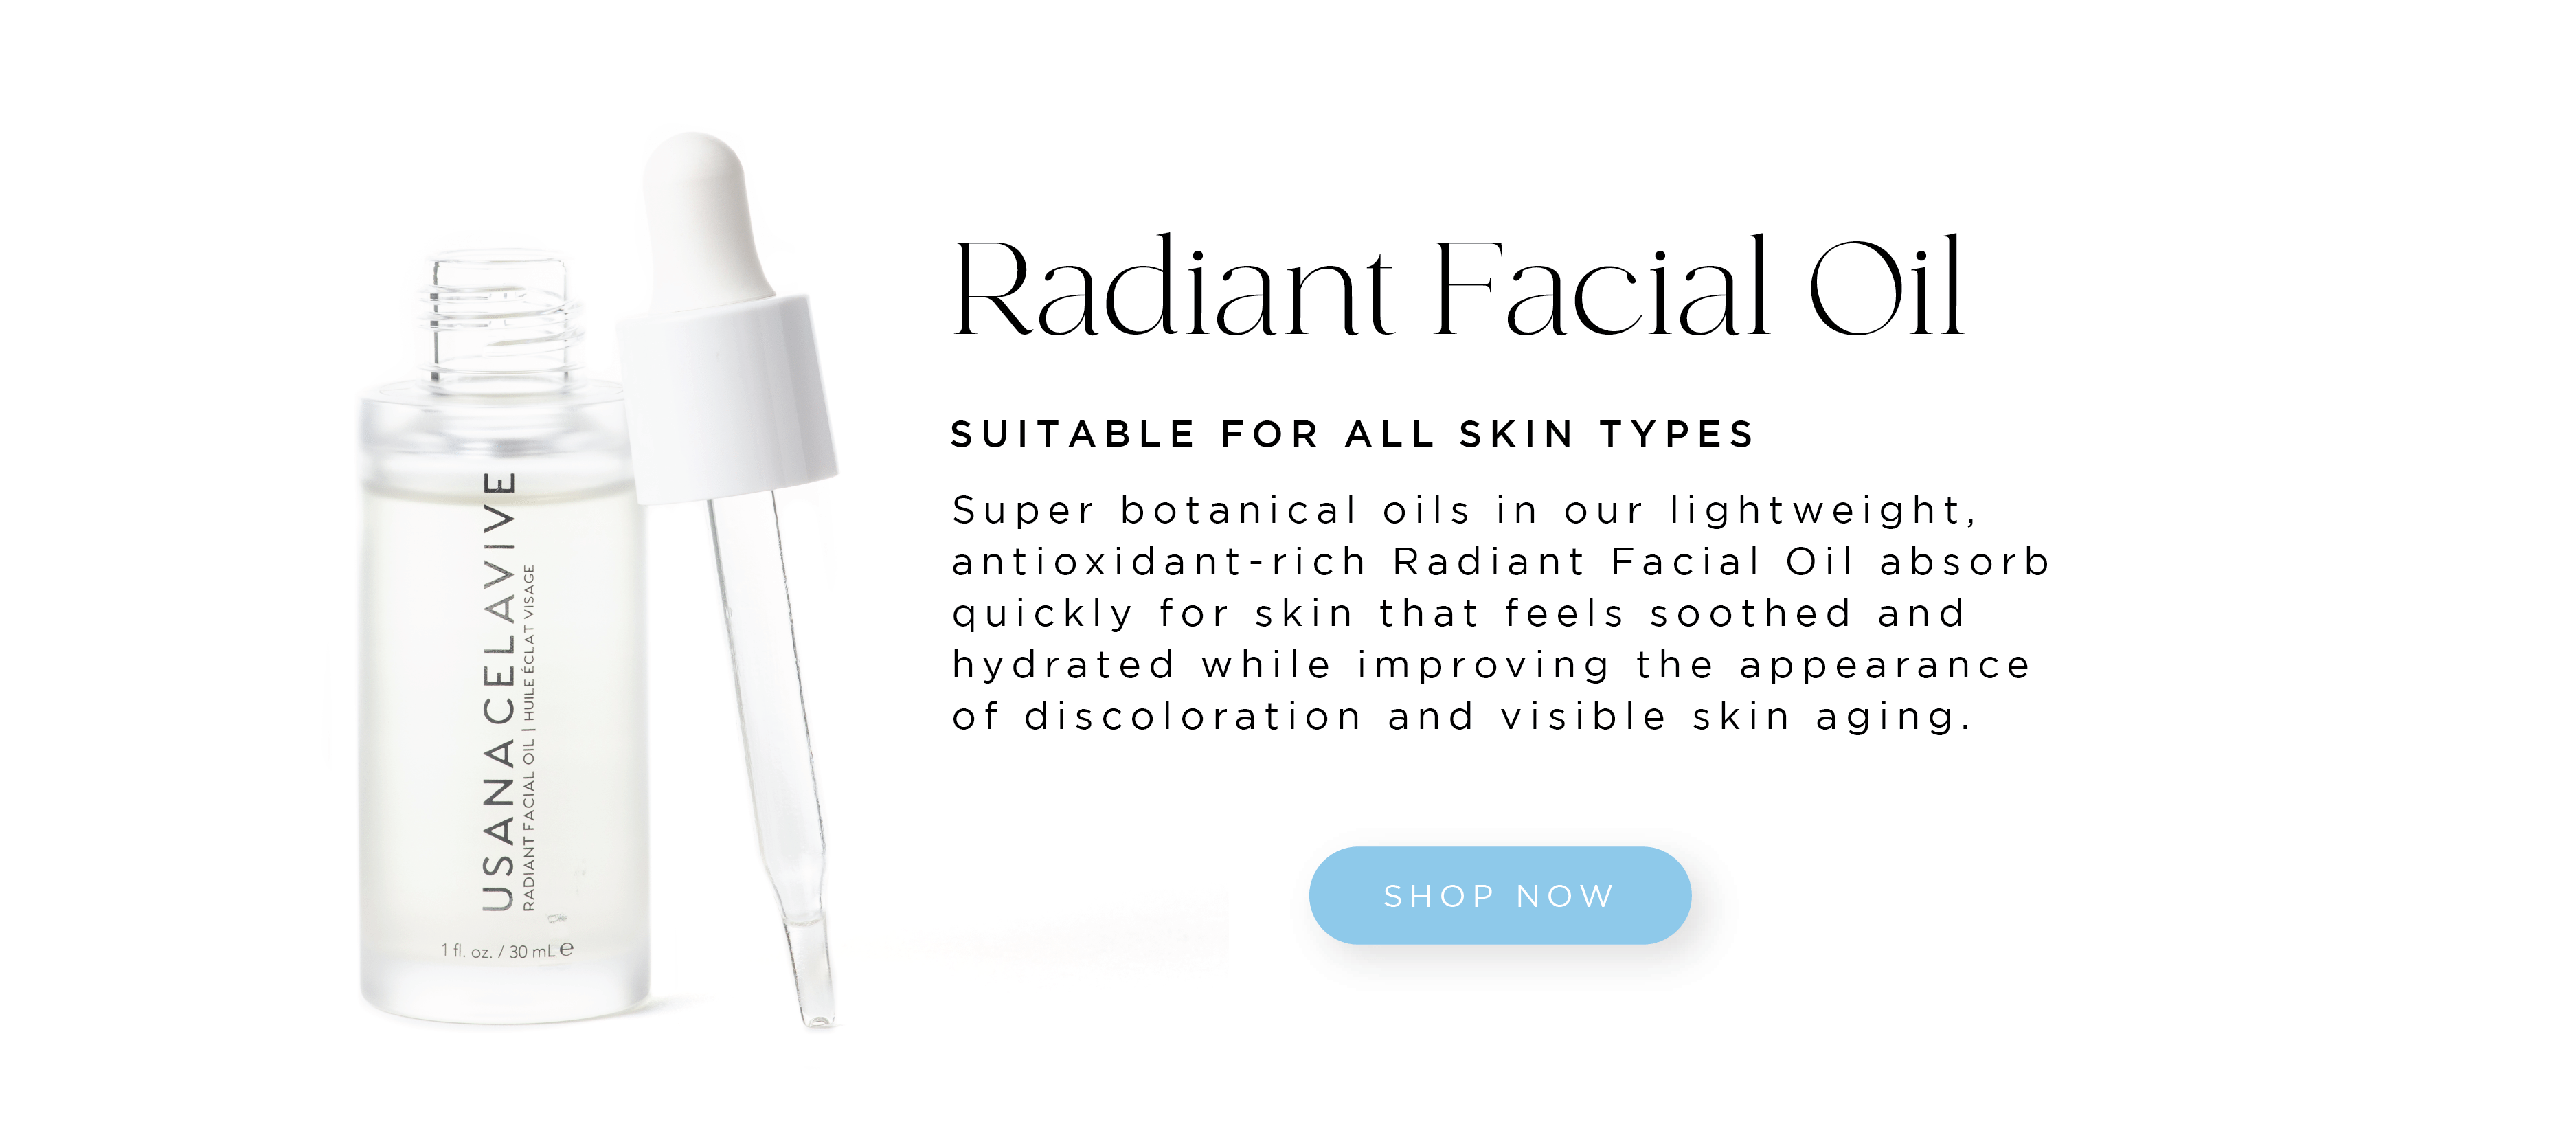 Radiant Facial Oil